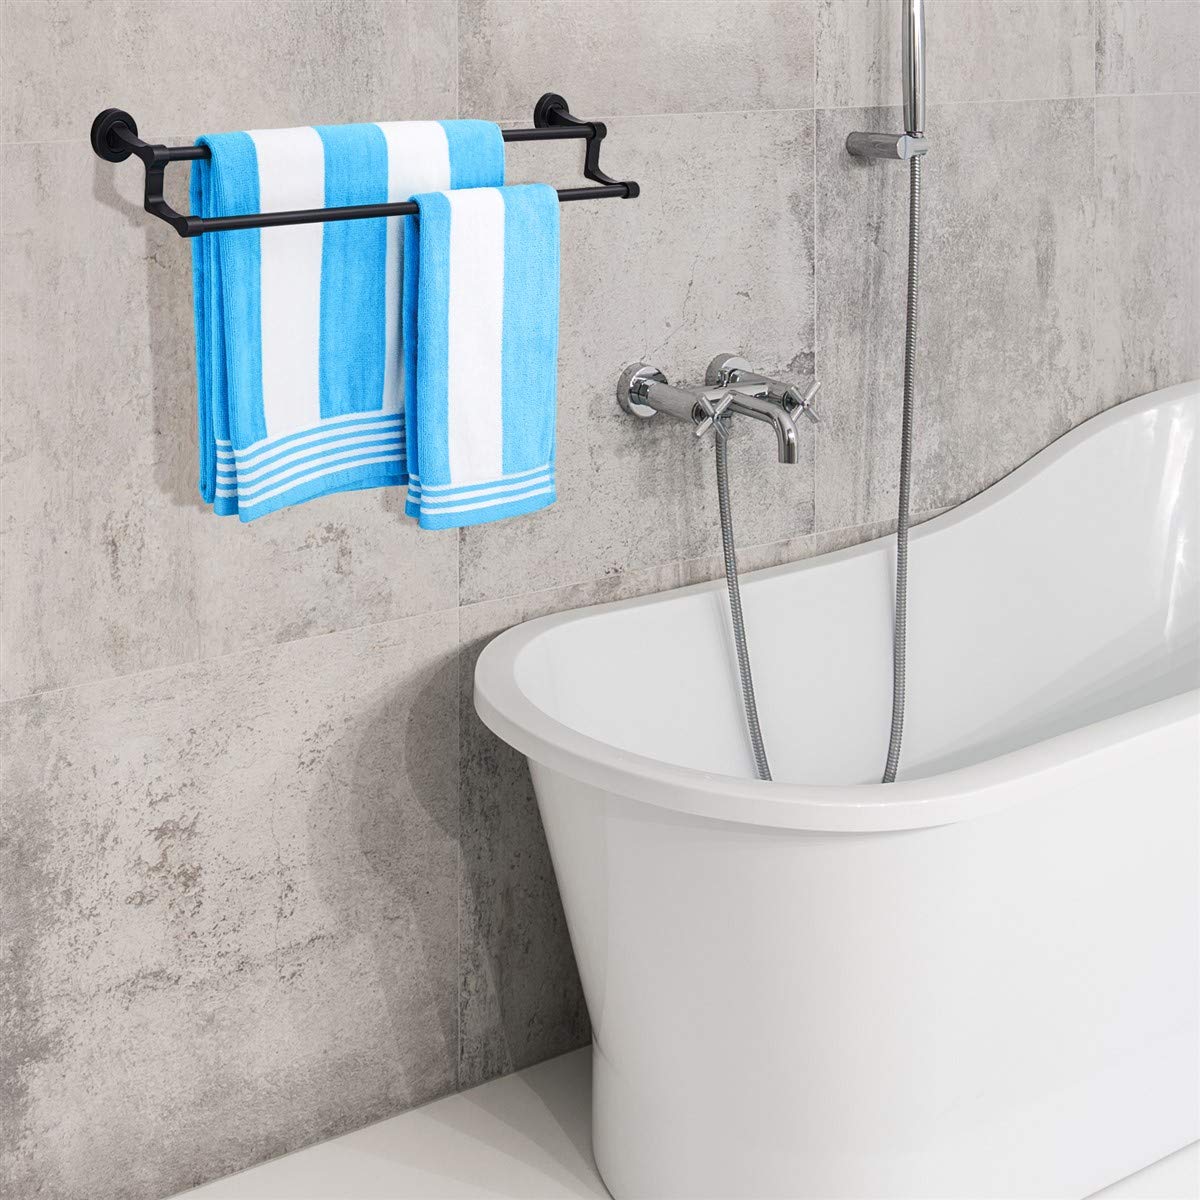 Plantex Premium Stainless Steel & Aluminum Towel Rod/Towel Hanger for Bathroom/Towel Rod/Stand/Bathroom Accessories (24 Inch-Black)